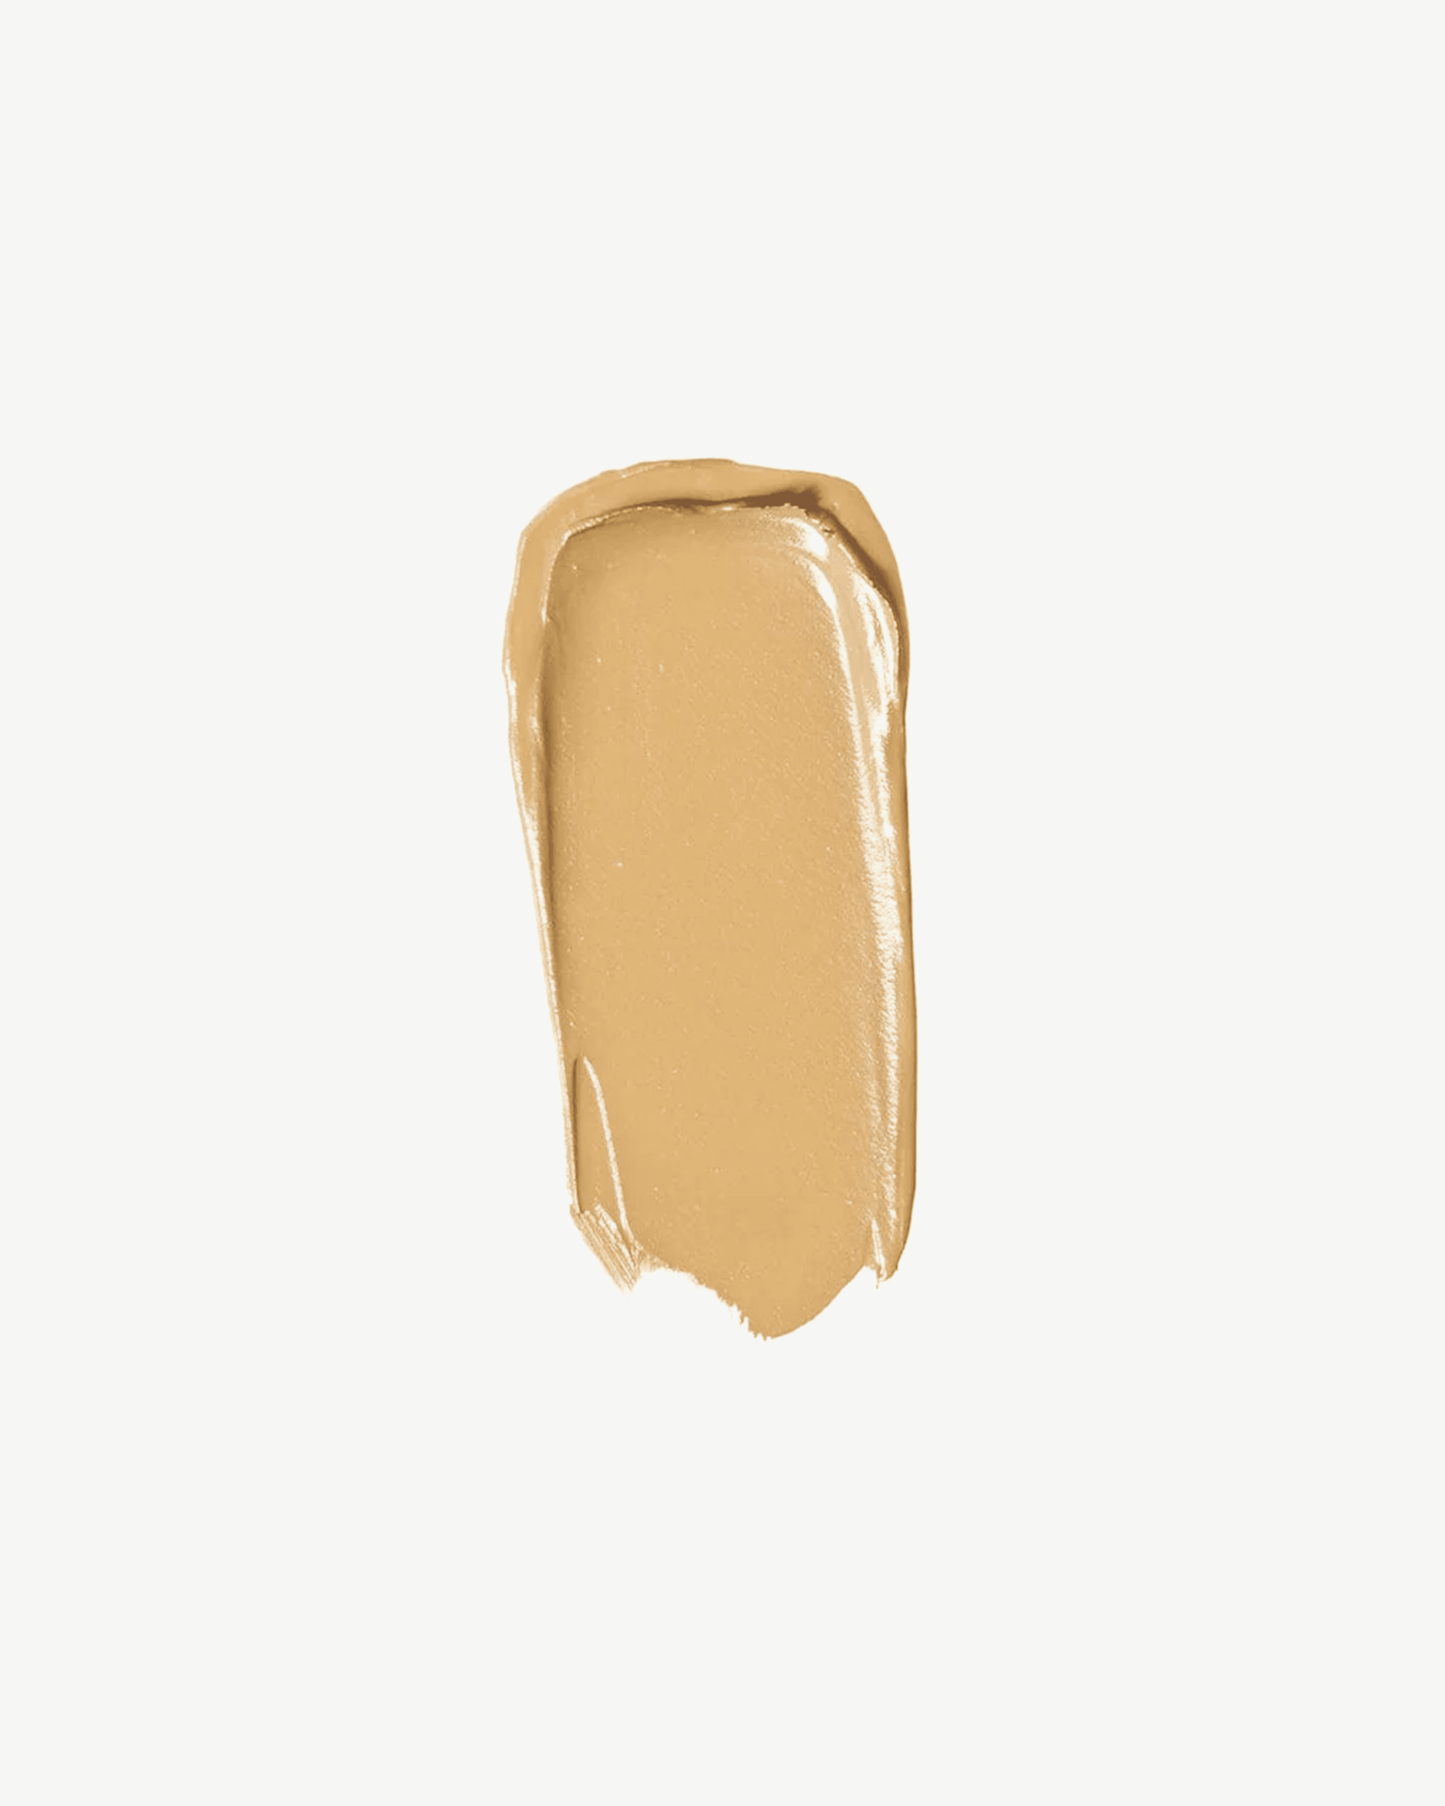 Gold 60 (medium to tan with gold undertones)